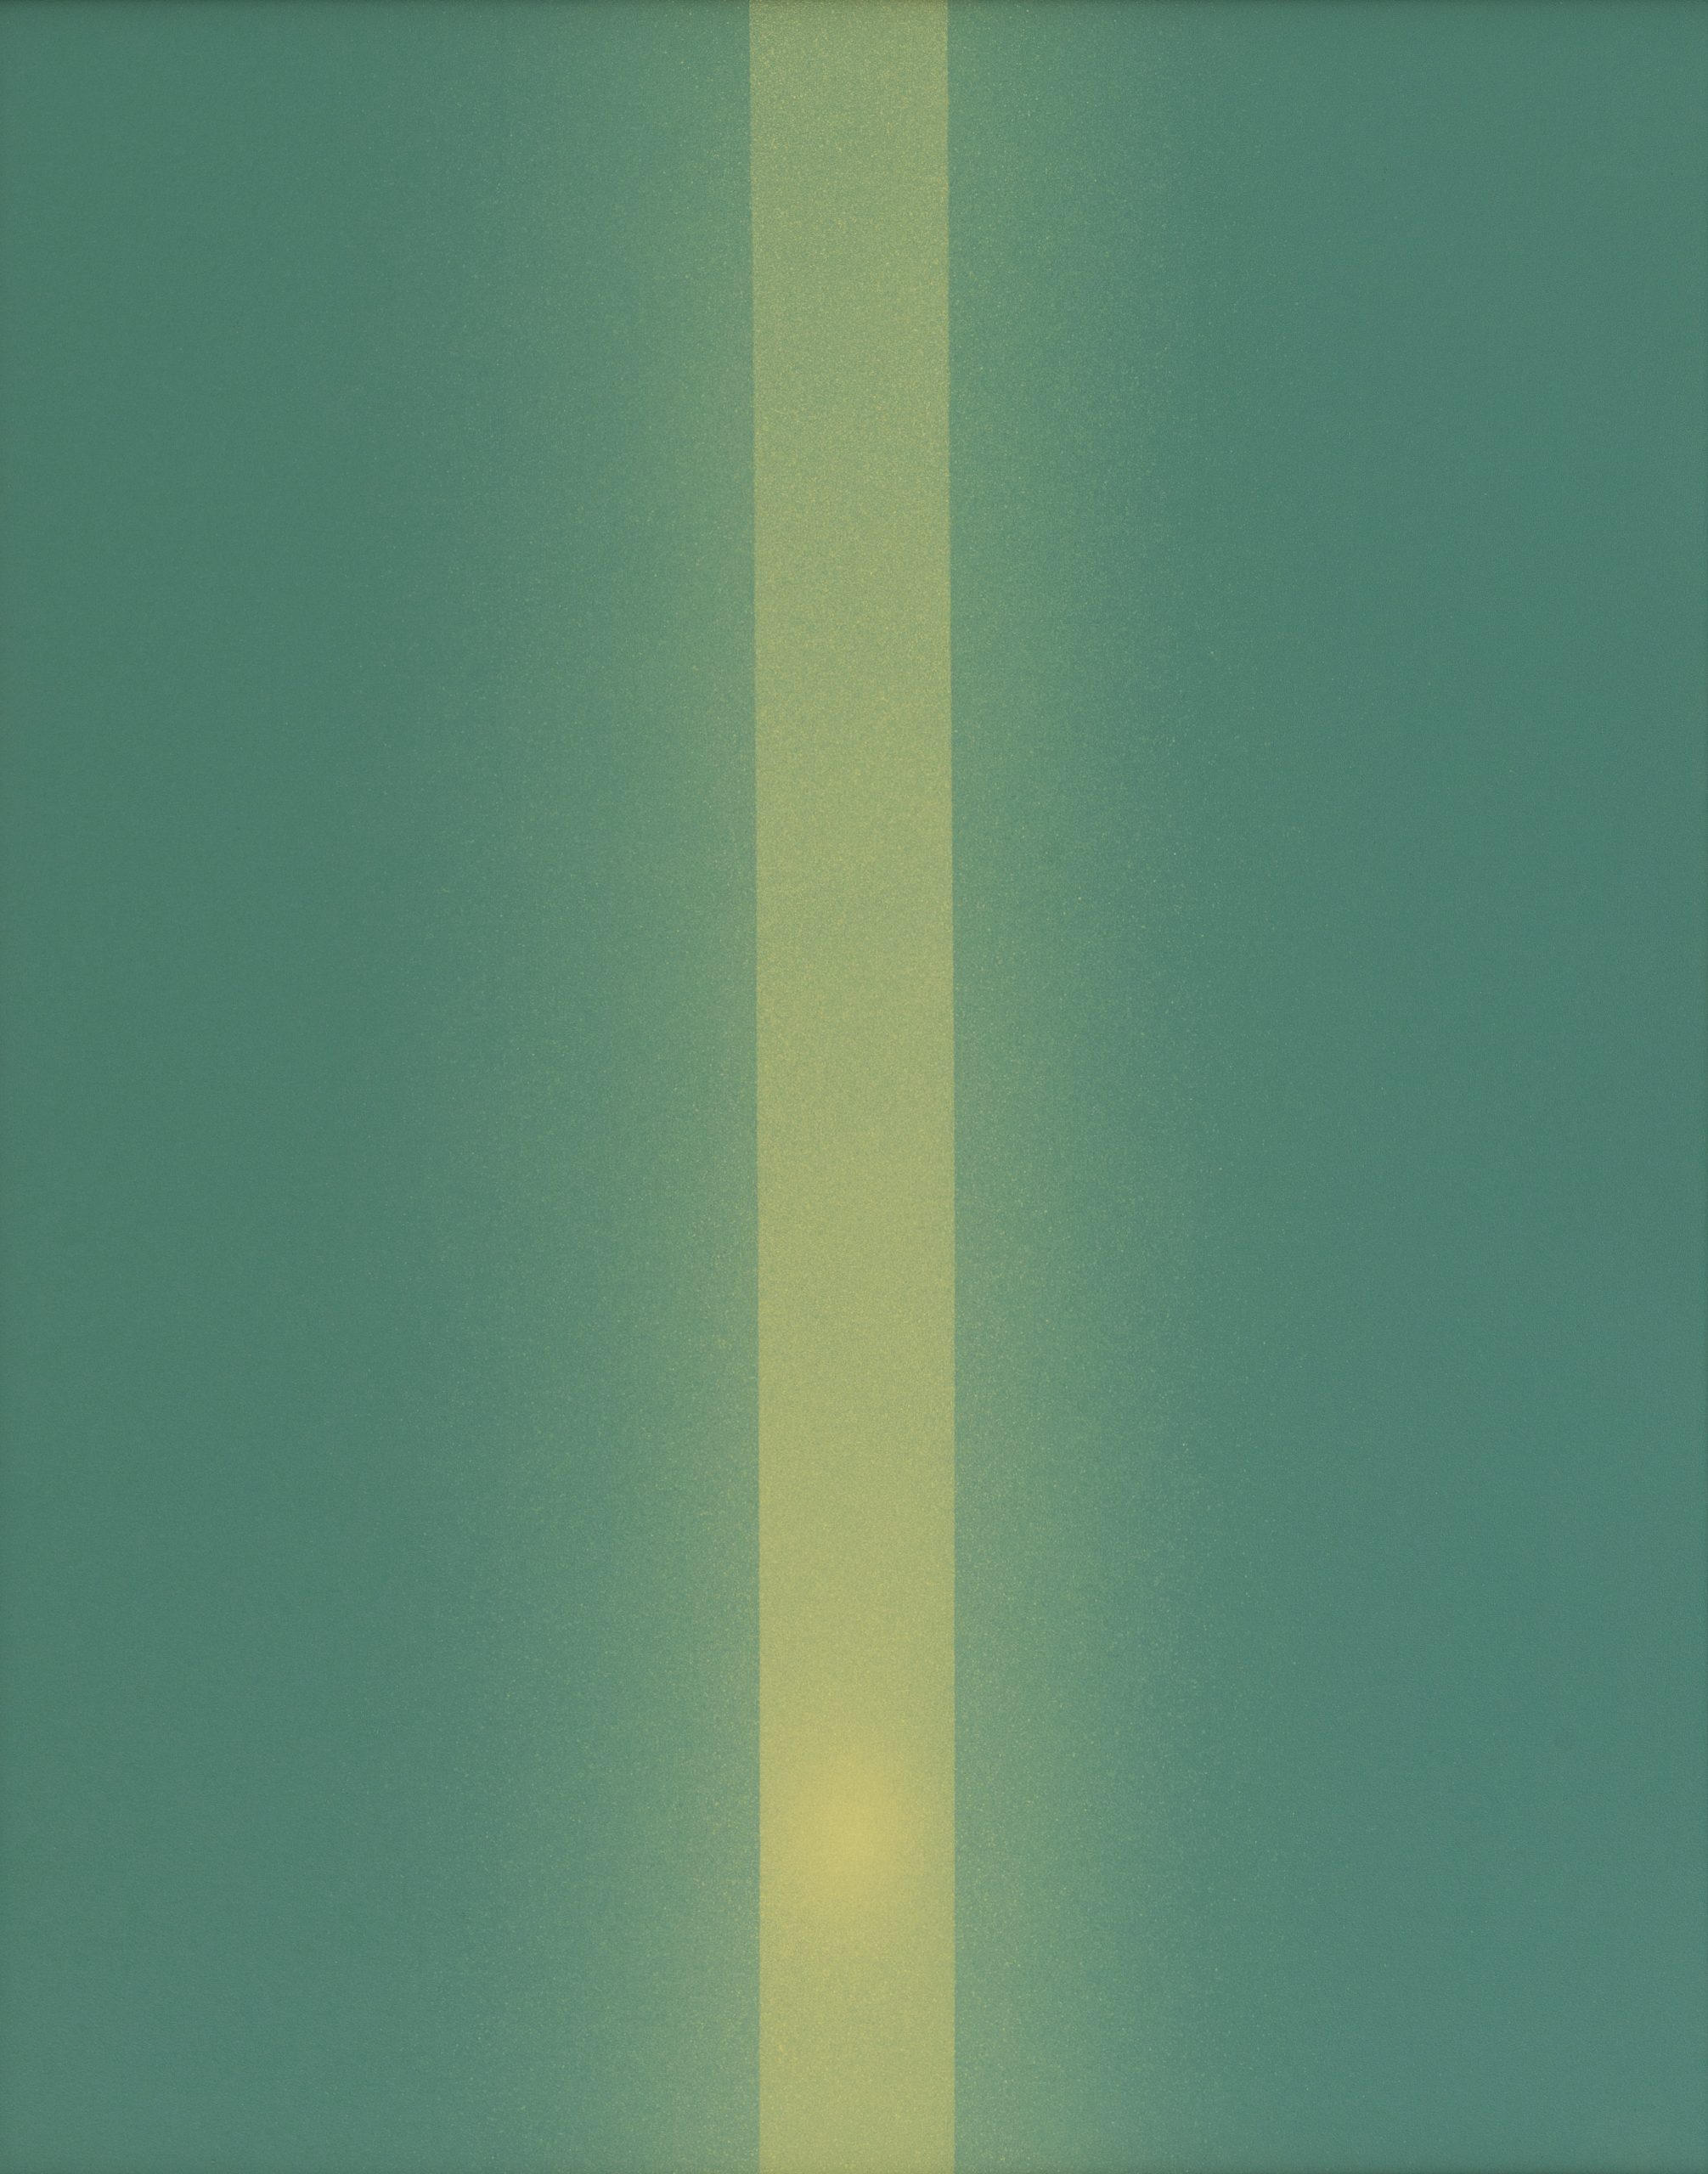 Light - A Trilogy (Polymer No. 10), 1966, Acrylic on Masonite